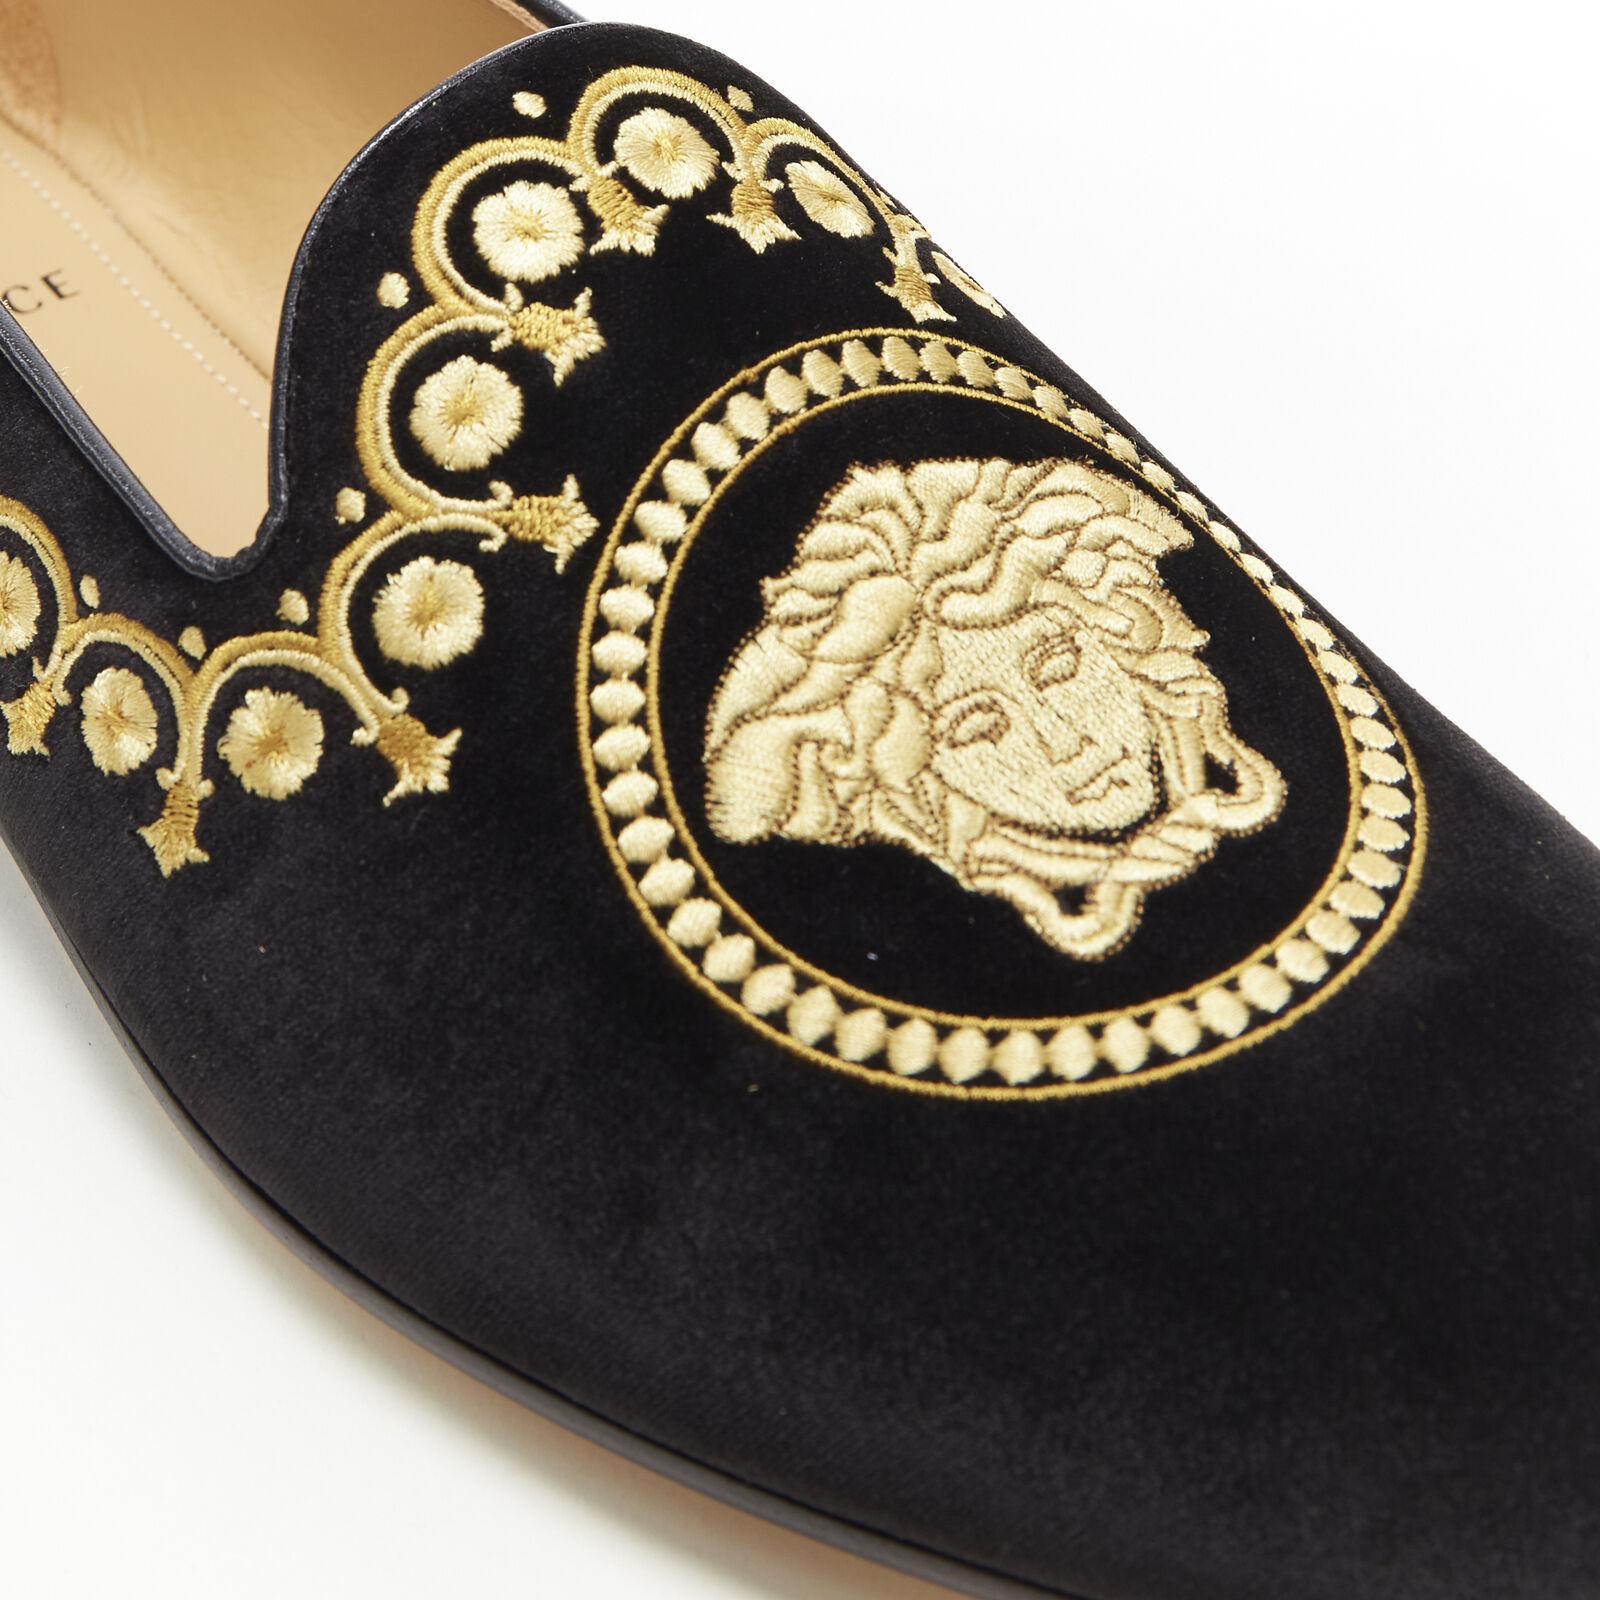 NEW VERSACE black vekvet Medusa baroque embroidery smoking slipper loafer EU42 9